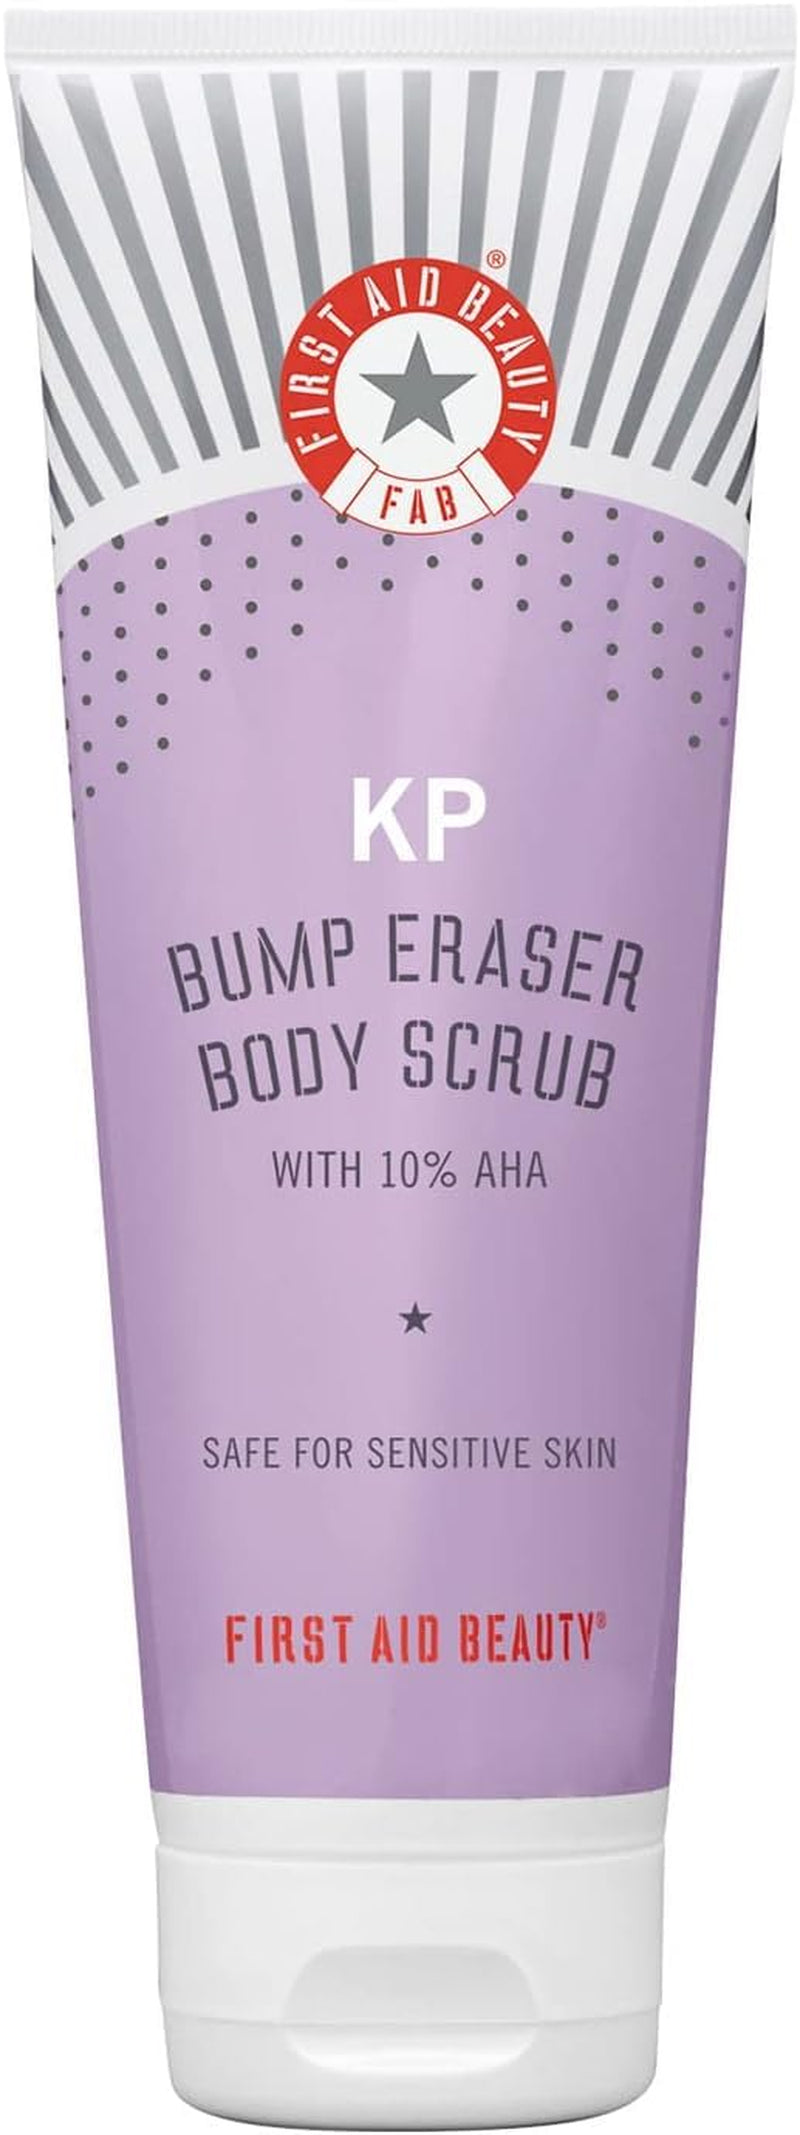 Professional Title: "First Aid Beauty KP Bump Eraser Body Scrub - Keratosis Pilaris Exfoliant with 10% AHA - Large 10 Oz Tube"